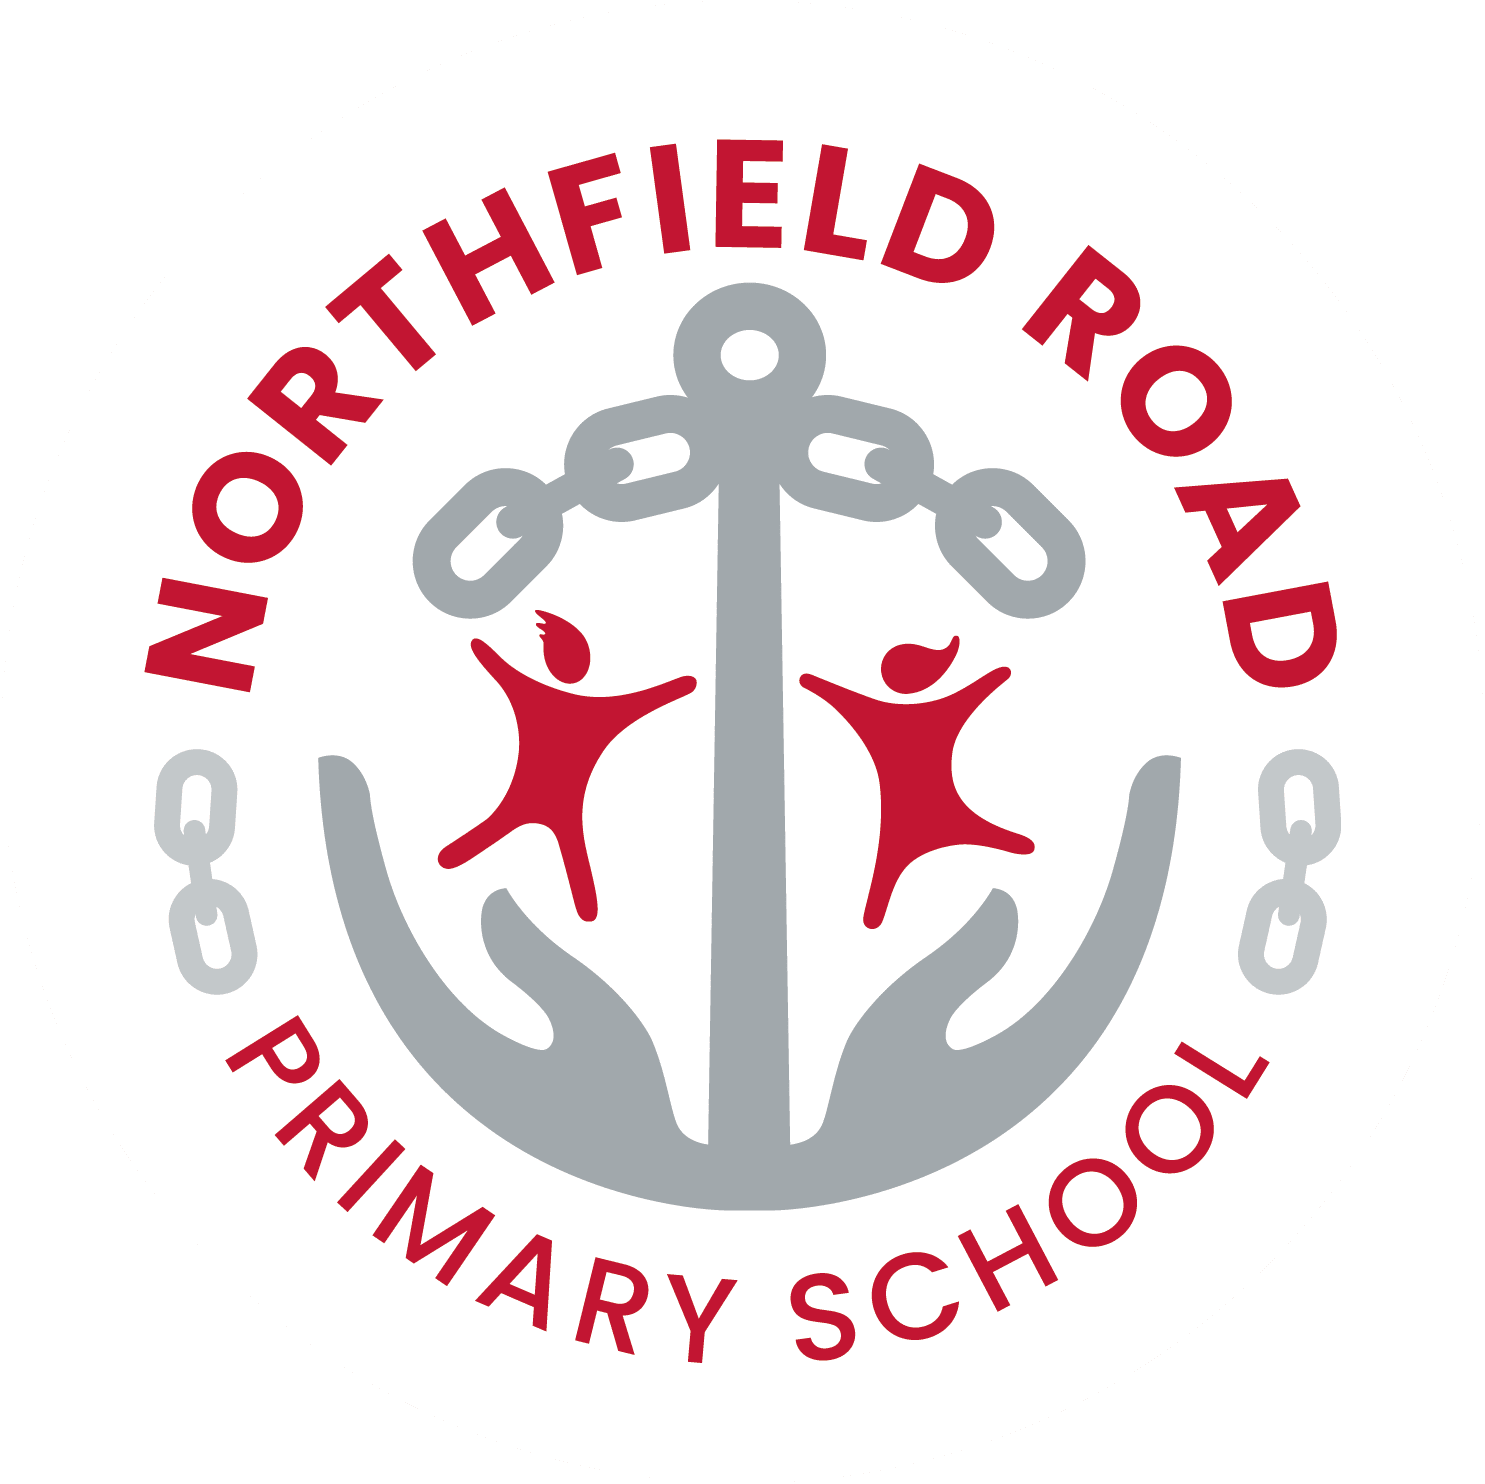 Northfield Road Primary School Logo